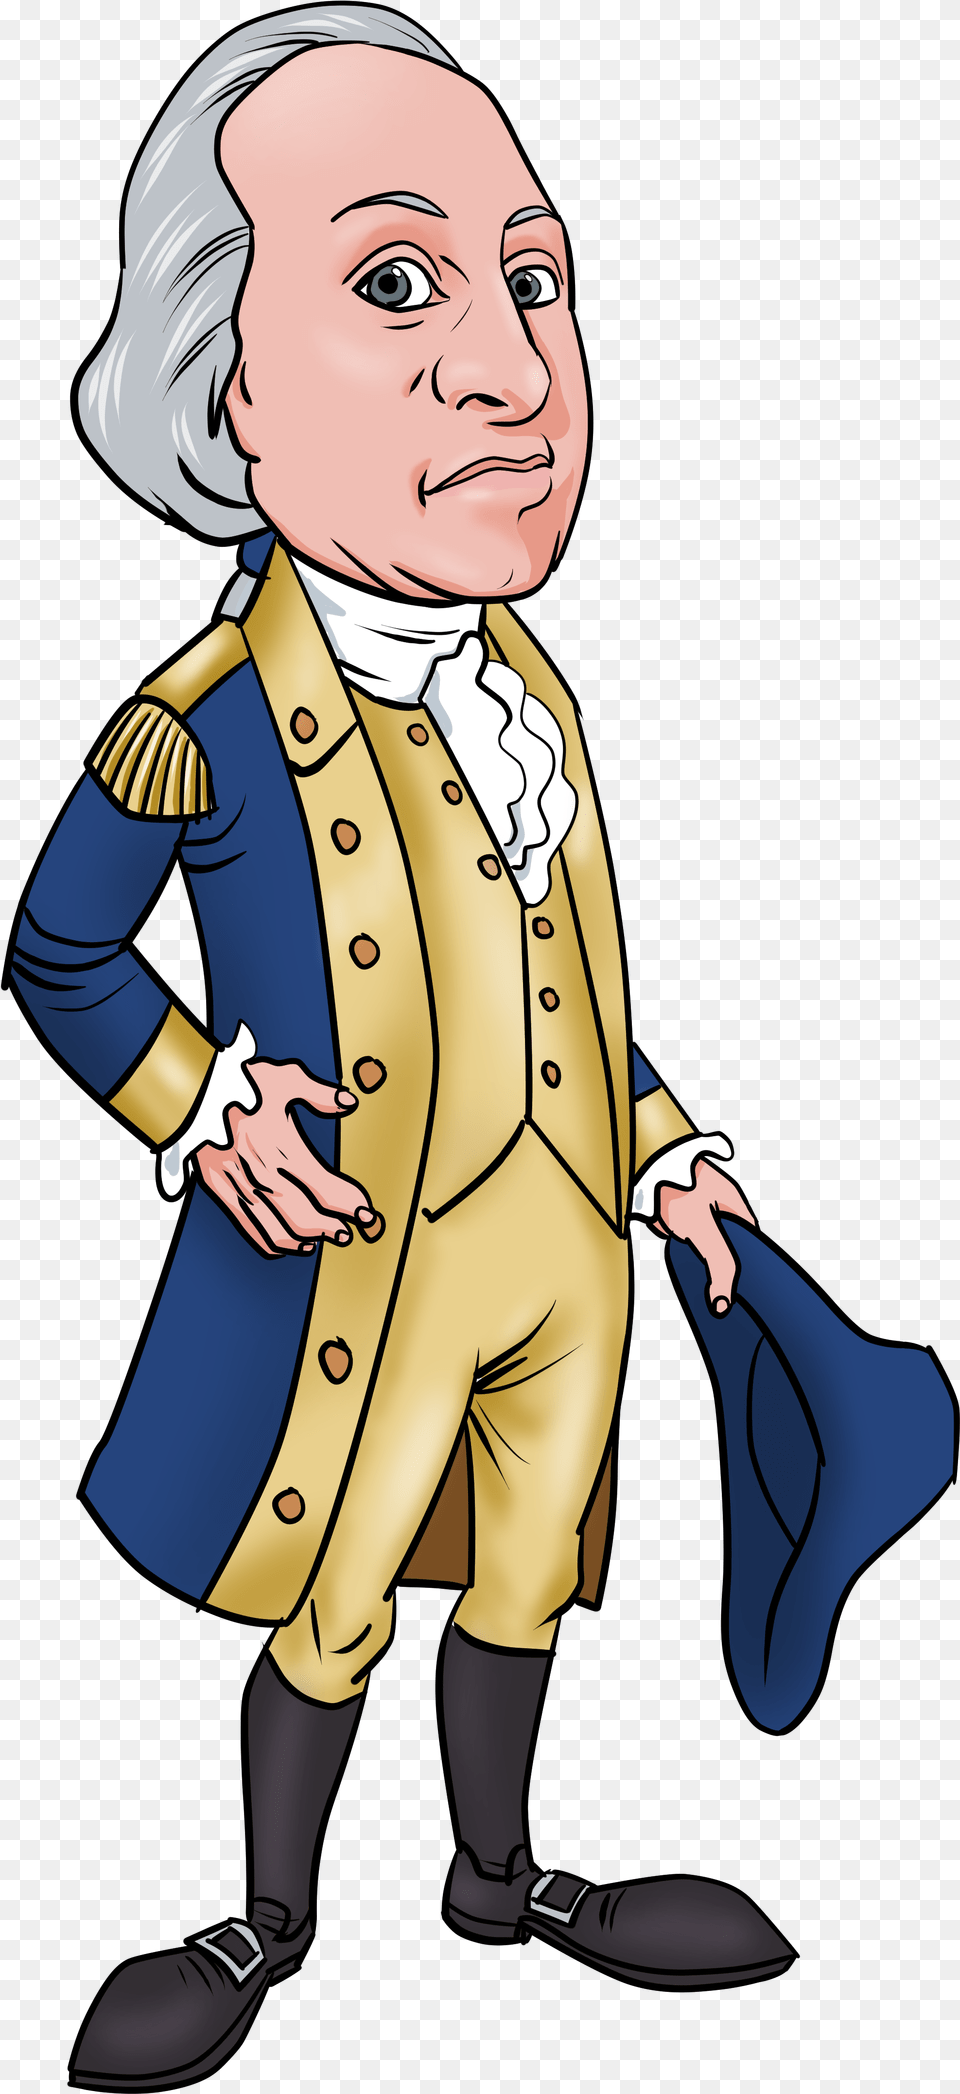 George Washington Image George Washington Clipart, Clothing, Coat, Adult, Person Free Transparent Png